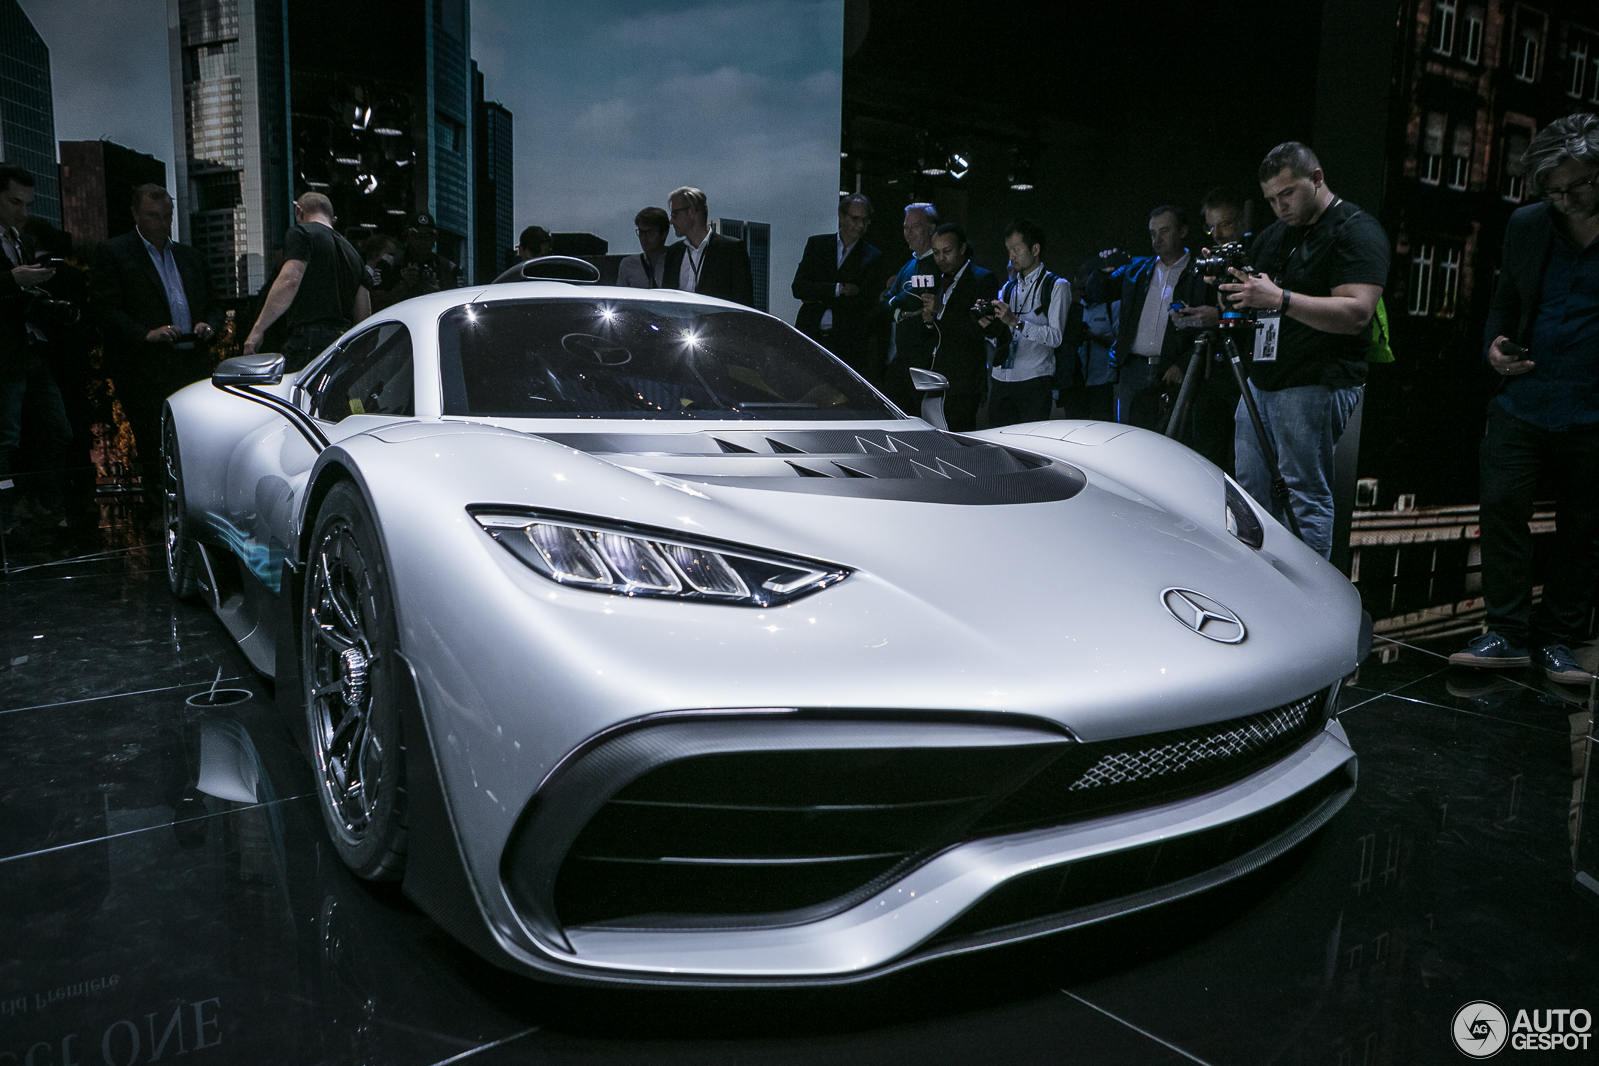 IAA 2017: Mercedes-AMG Project One